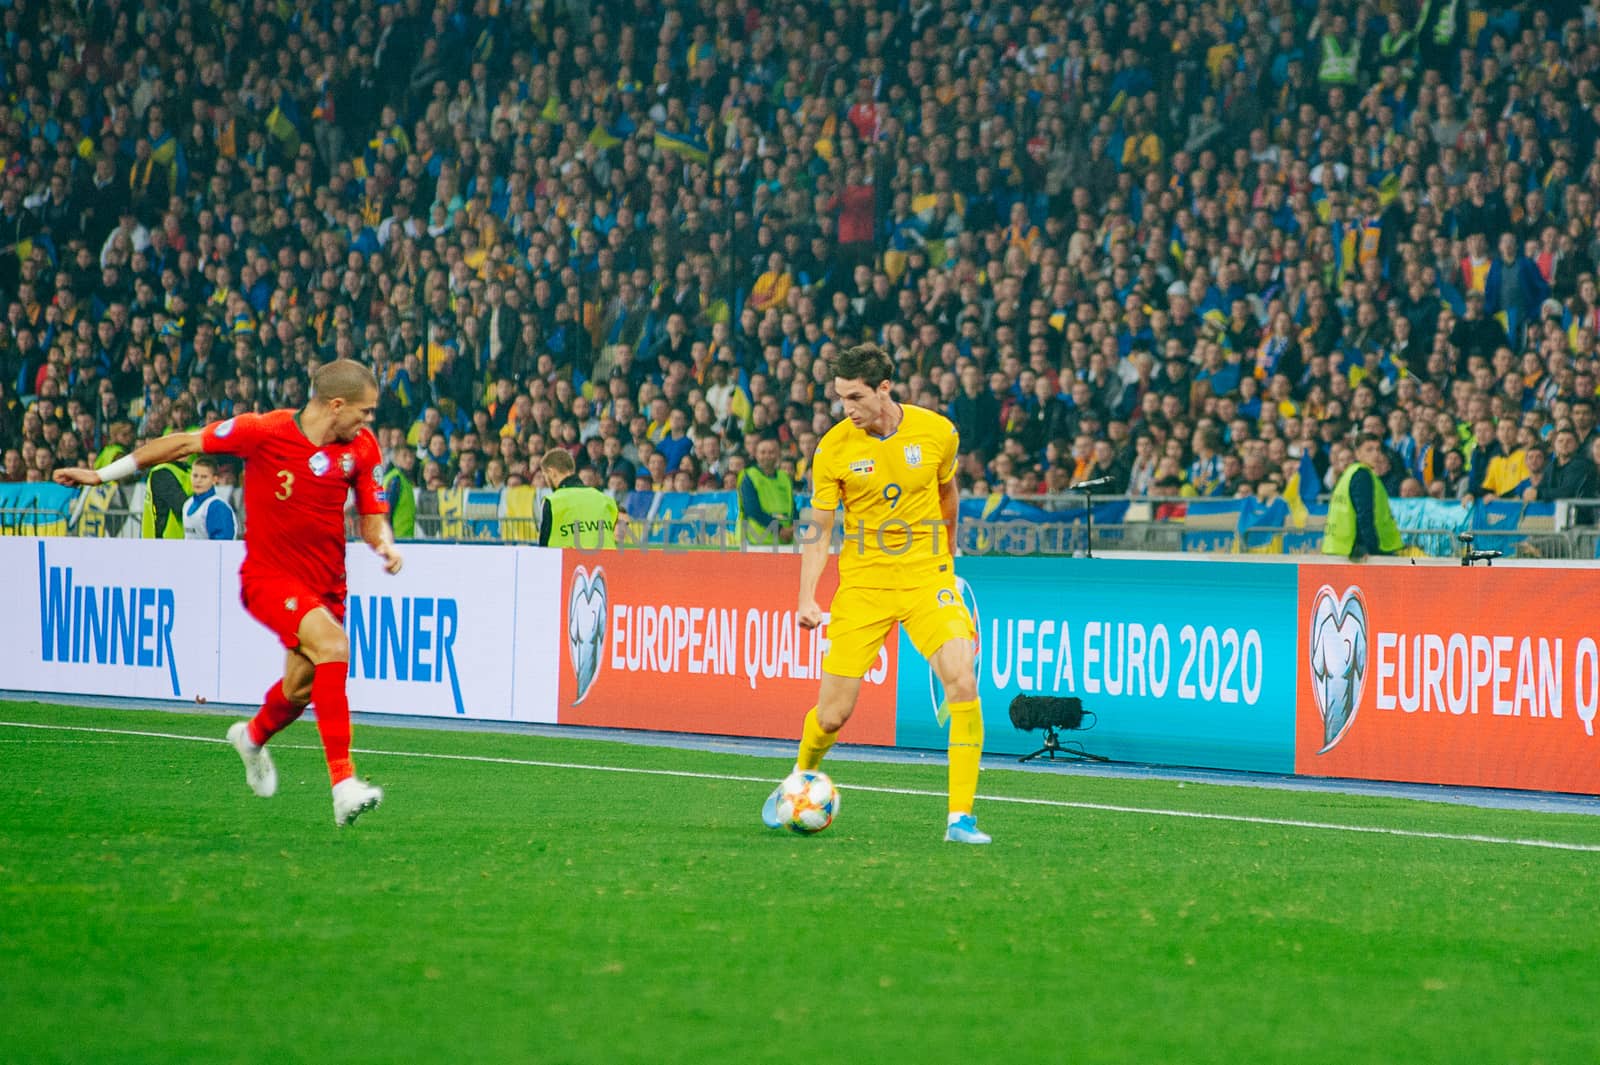 Kyiv, Ukraine - October 14, 2019: Roman Yaremcuk, forward of Ukraine during the match of EURO 2020 vs Portugal at the Olympic Stadium